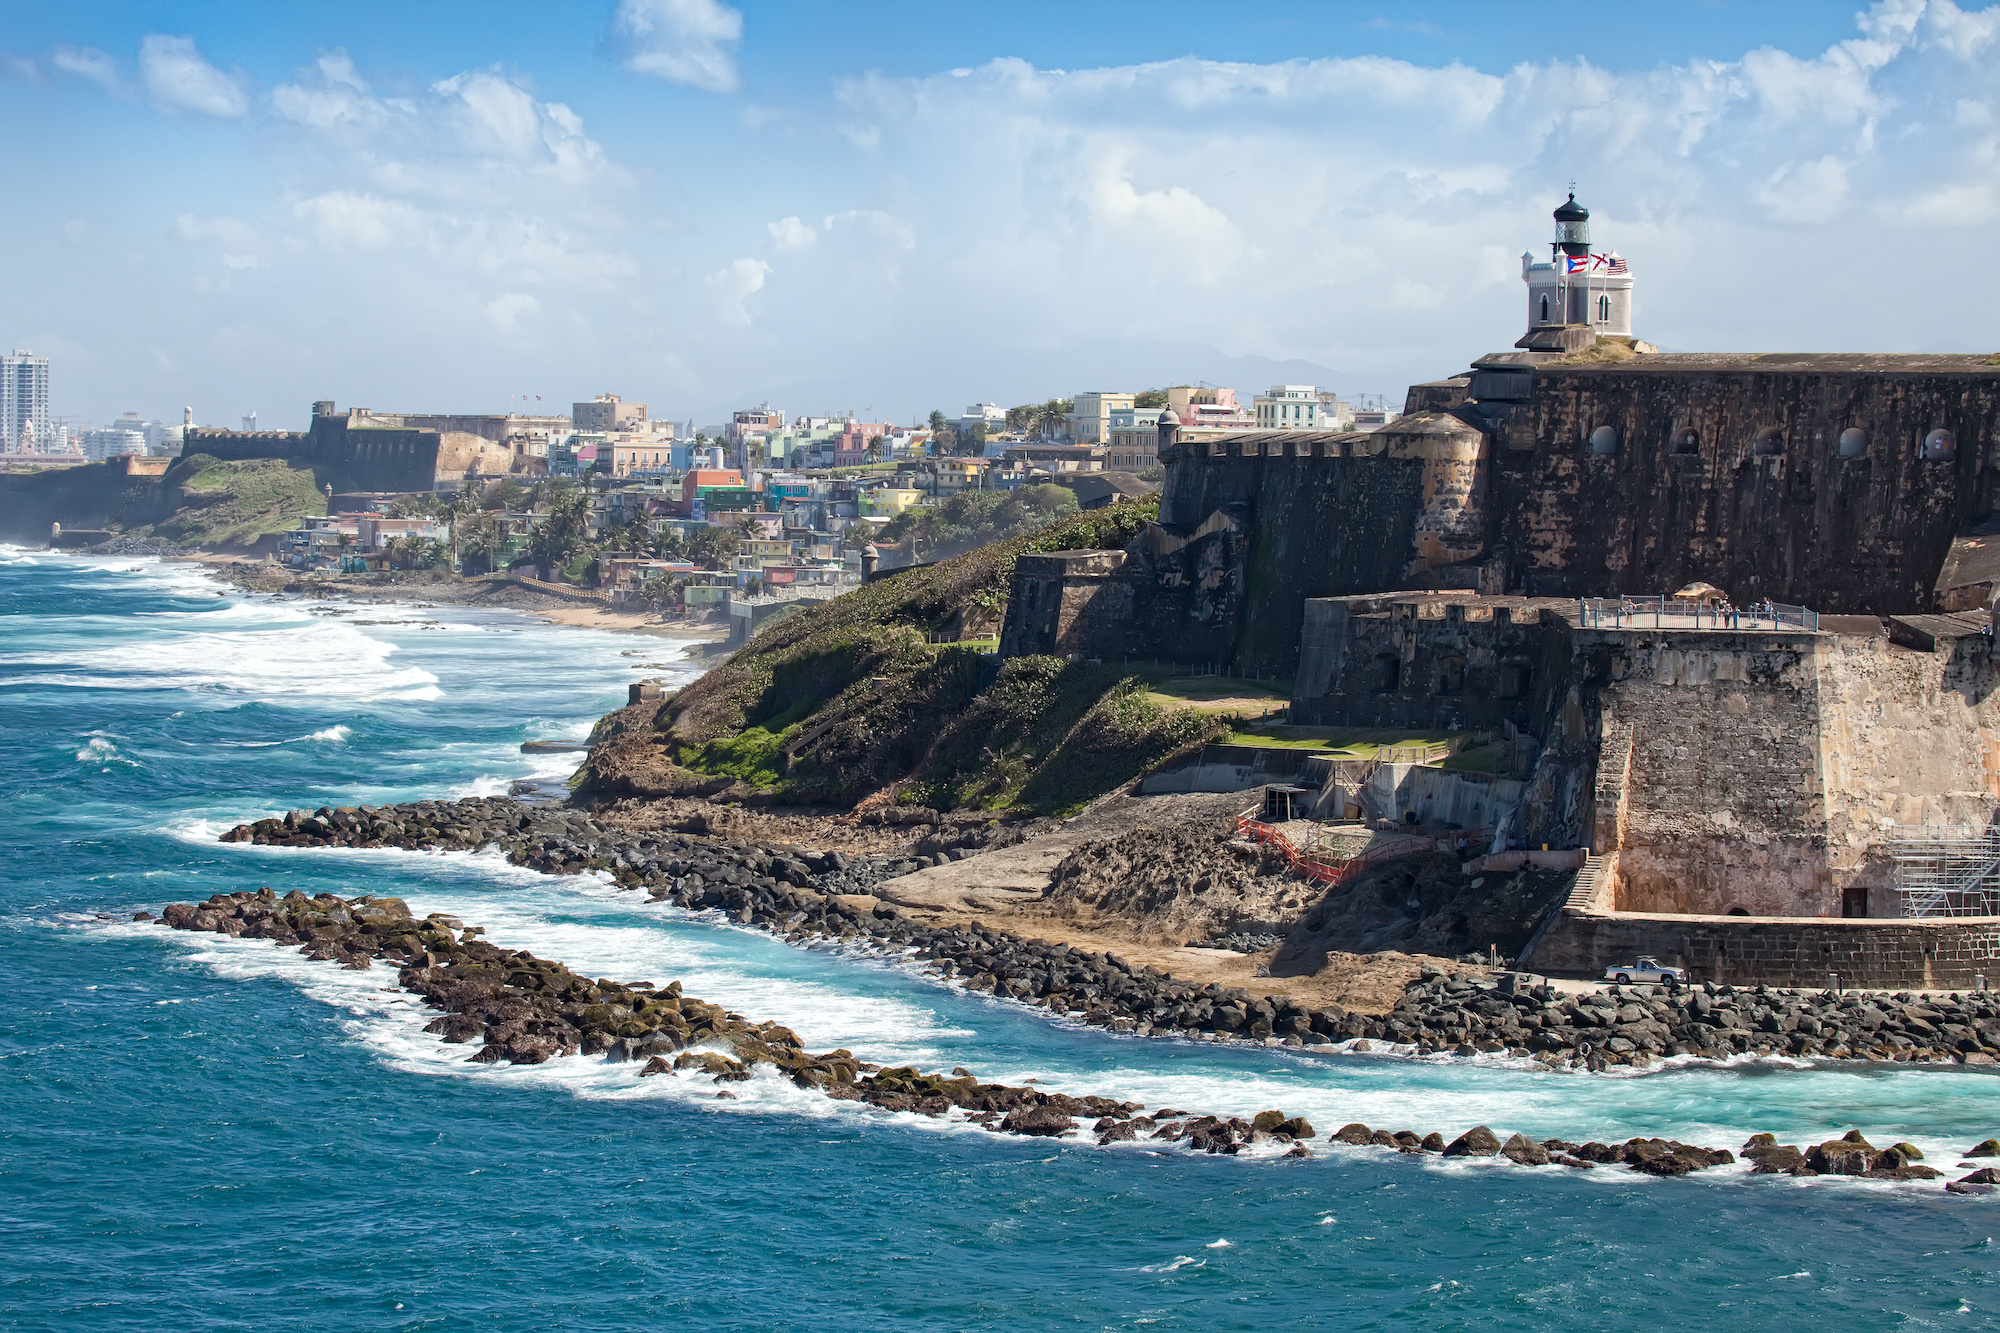 El Morro Castle, a historic fortress overlooking the ocean in Old San Juan, Puerto Rico